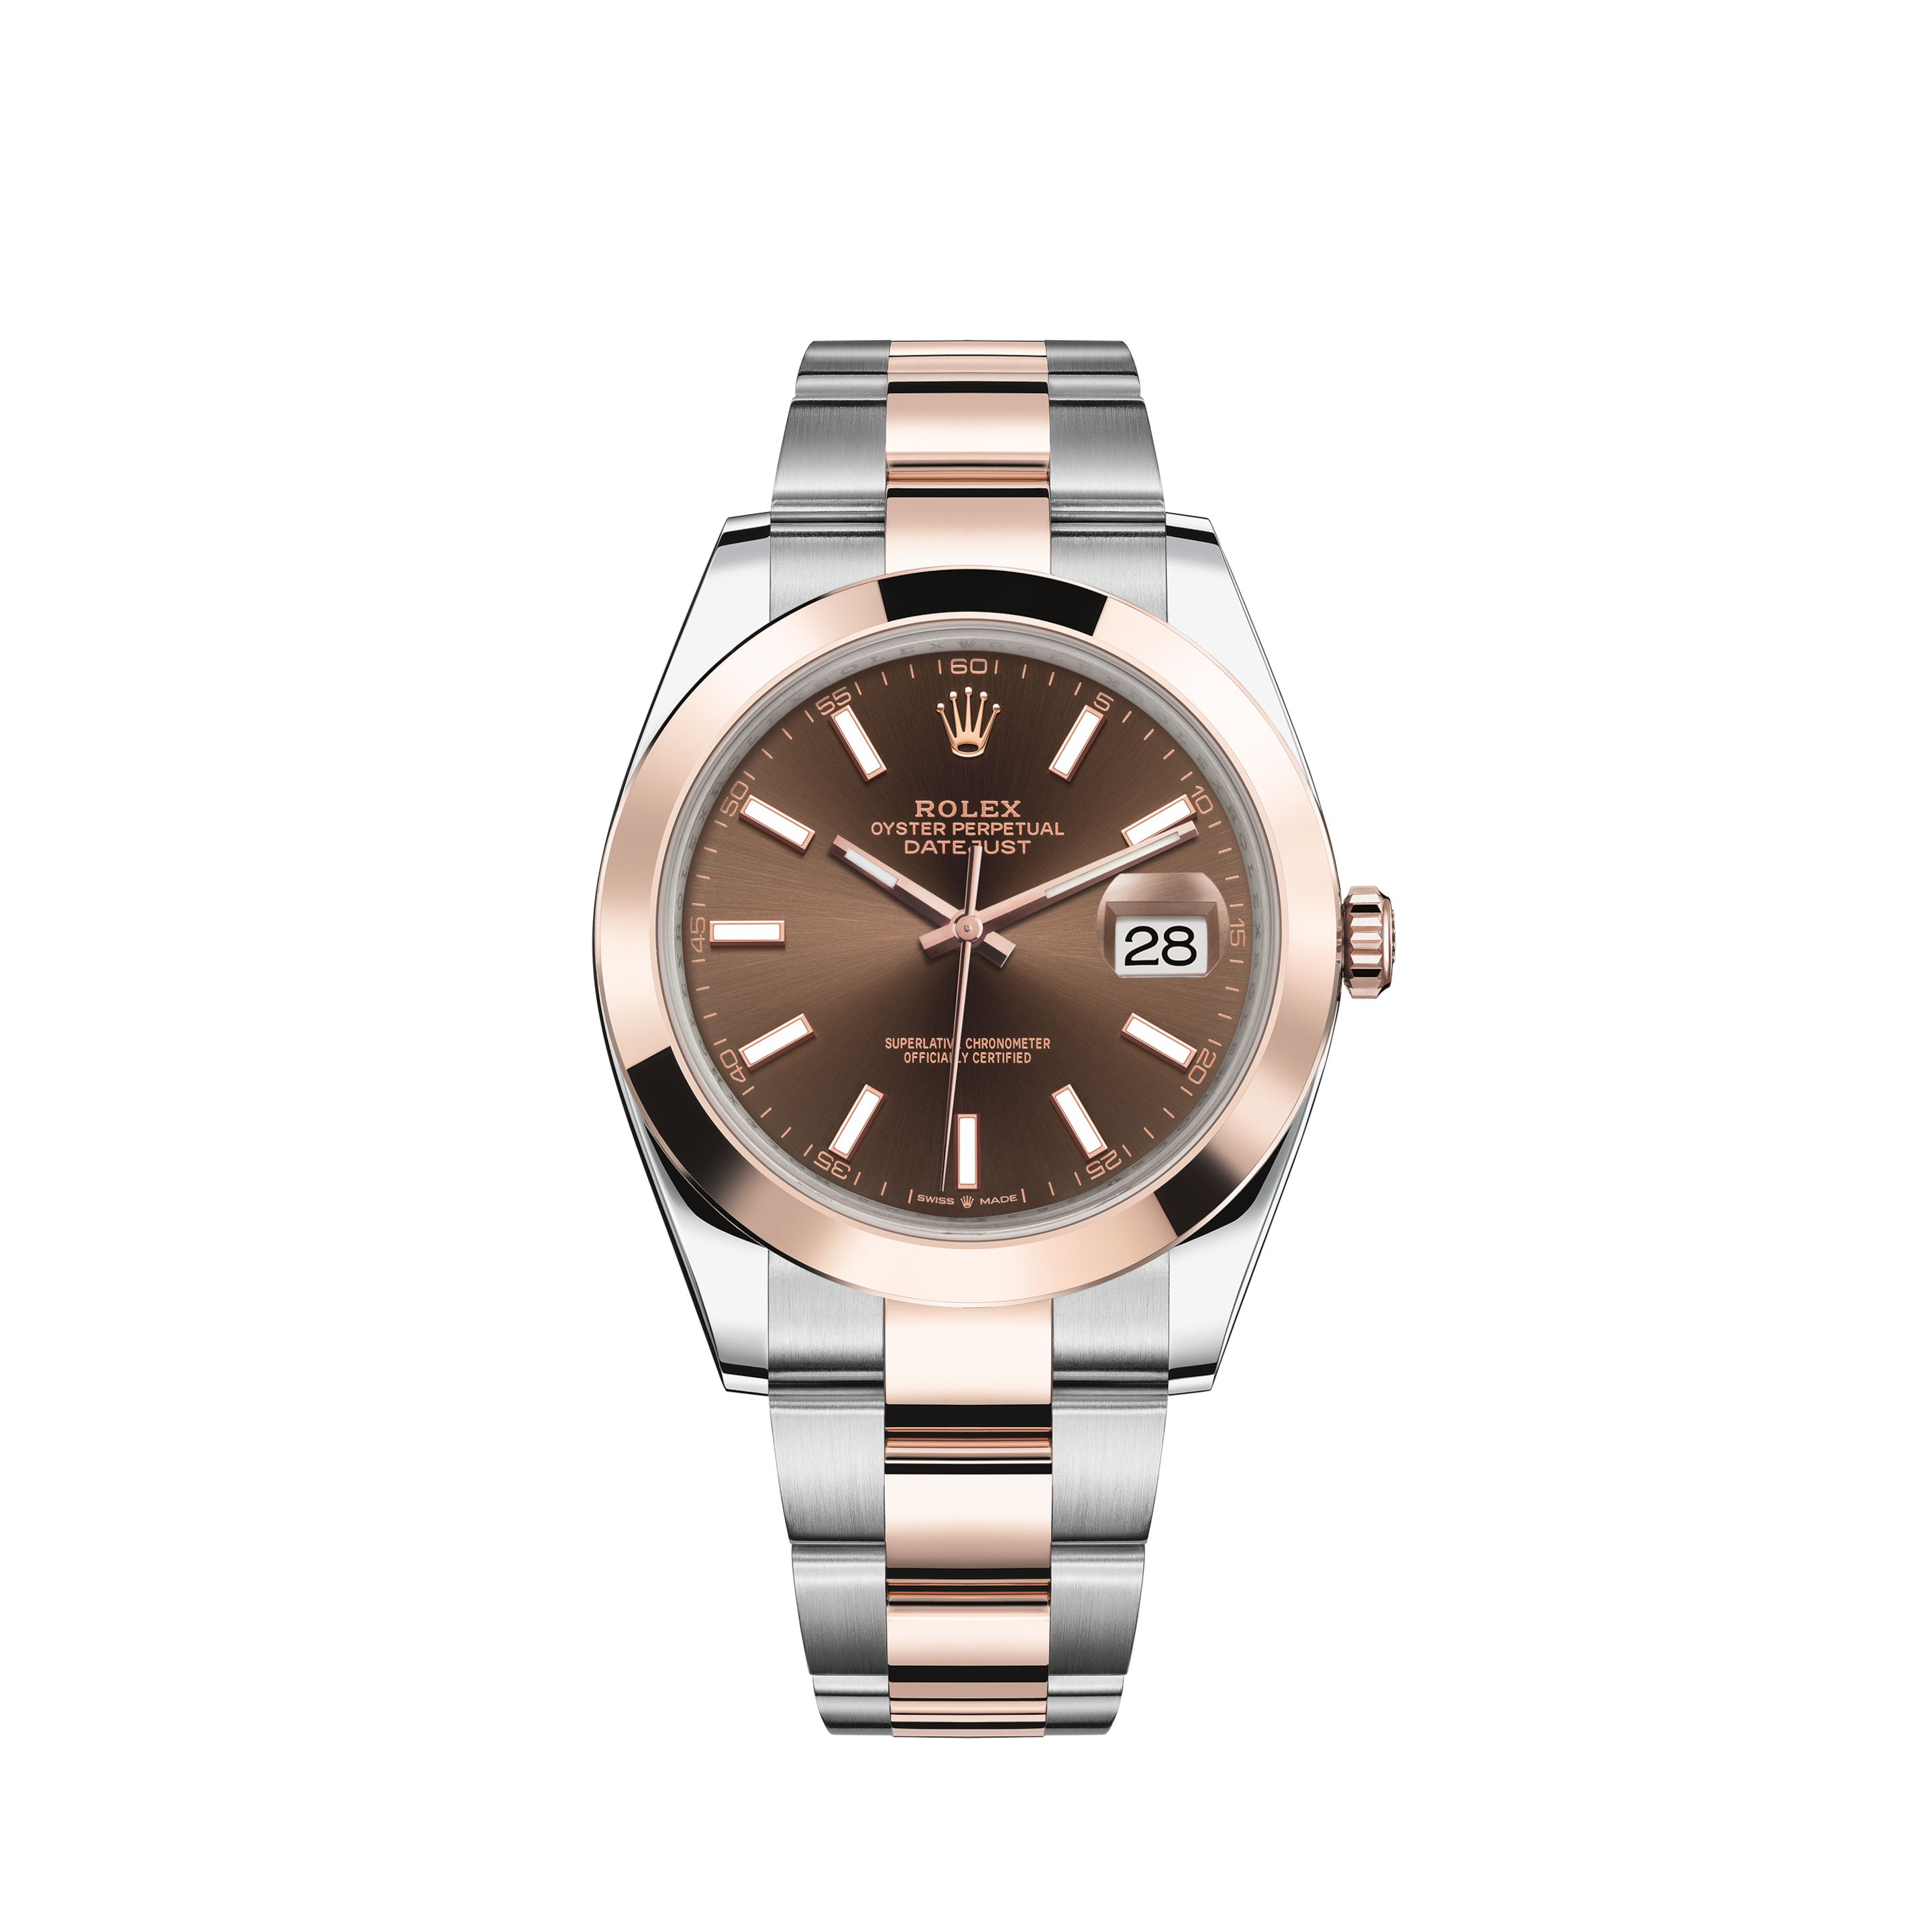 Rolex Explorer II 216570 Stainless Steel 42mm watch